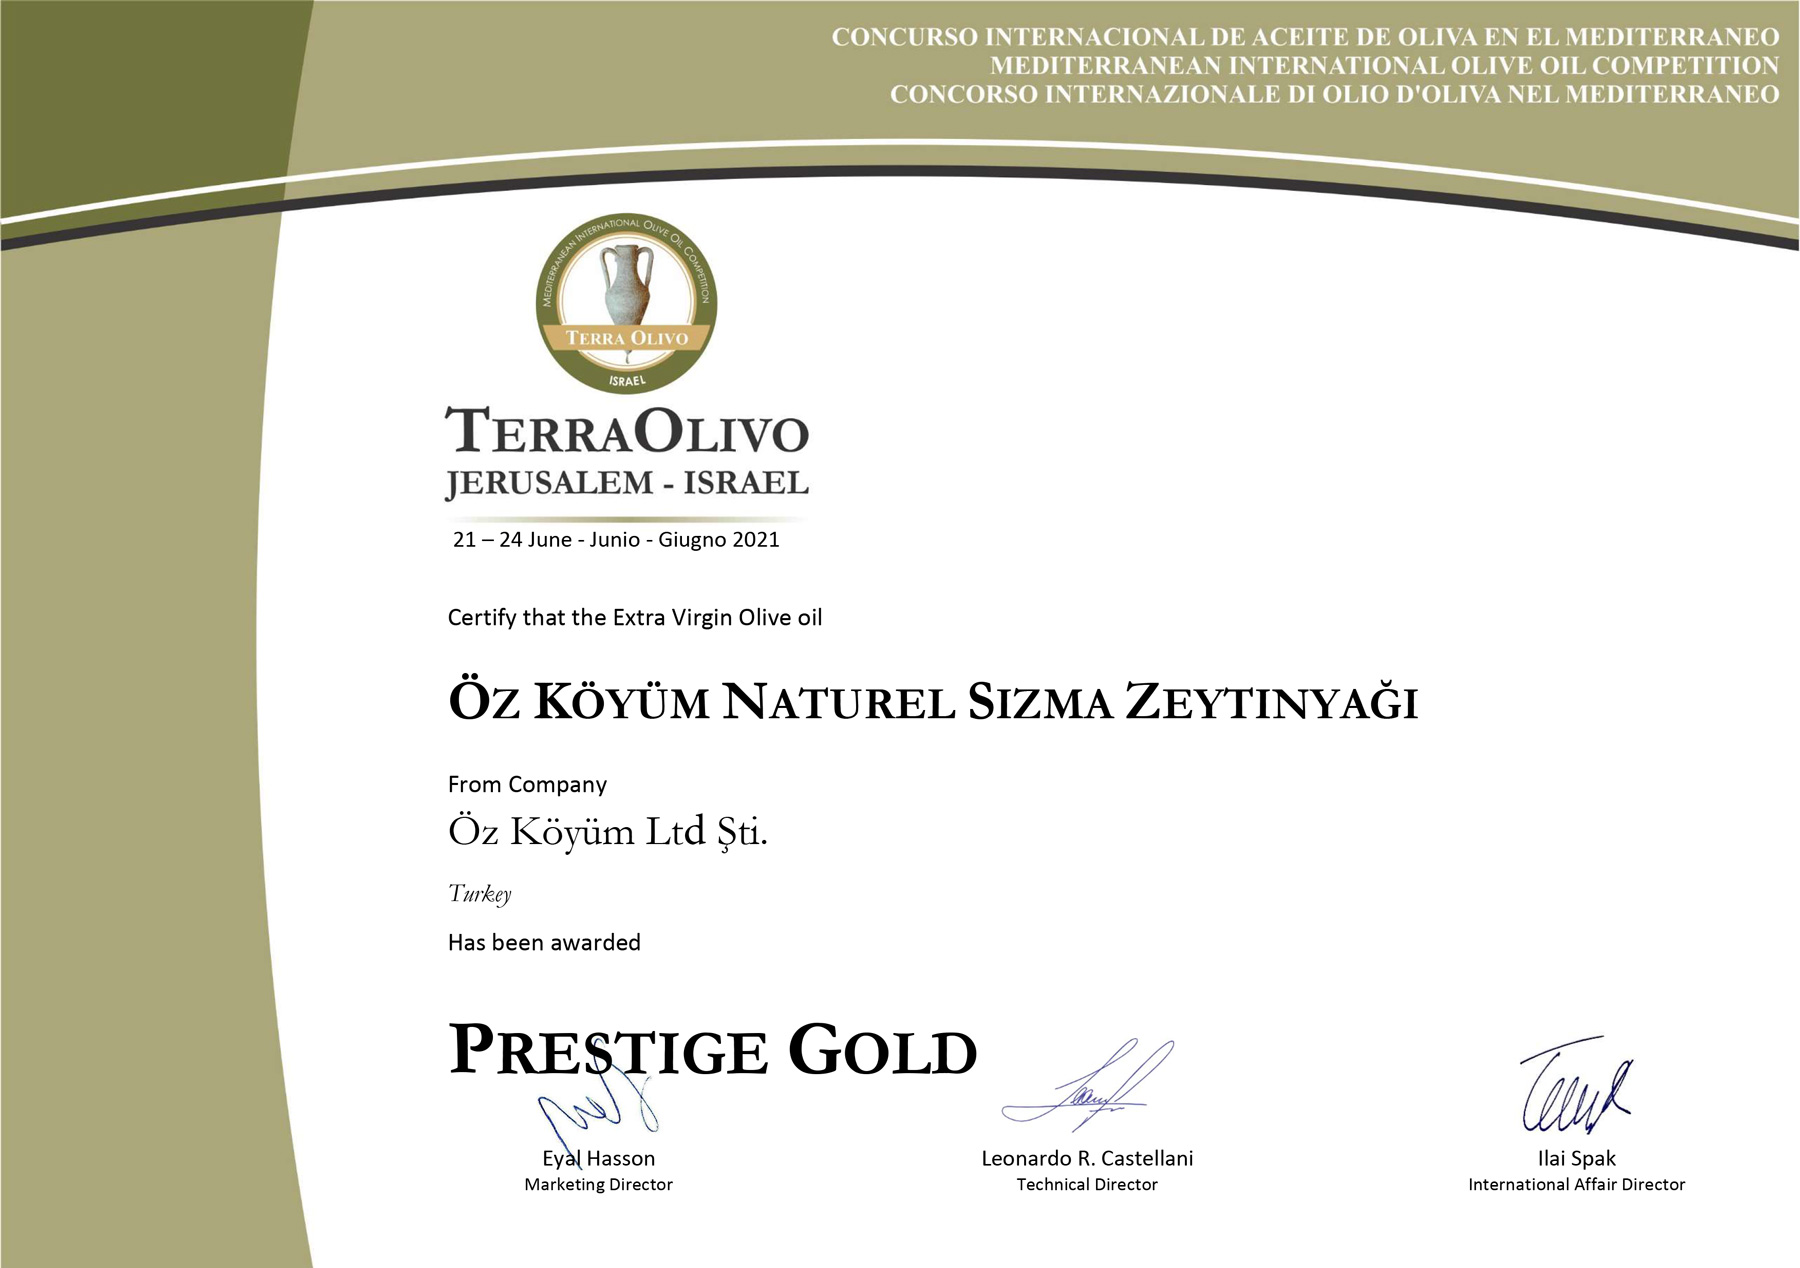 İsrail - Terraolivo IOOC - 2021 Altın Madalya